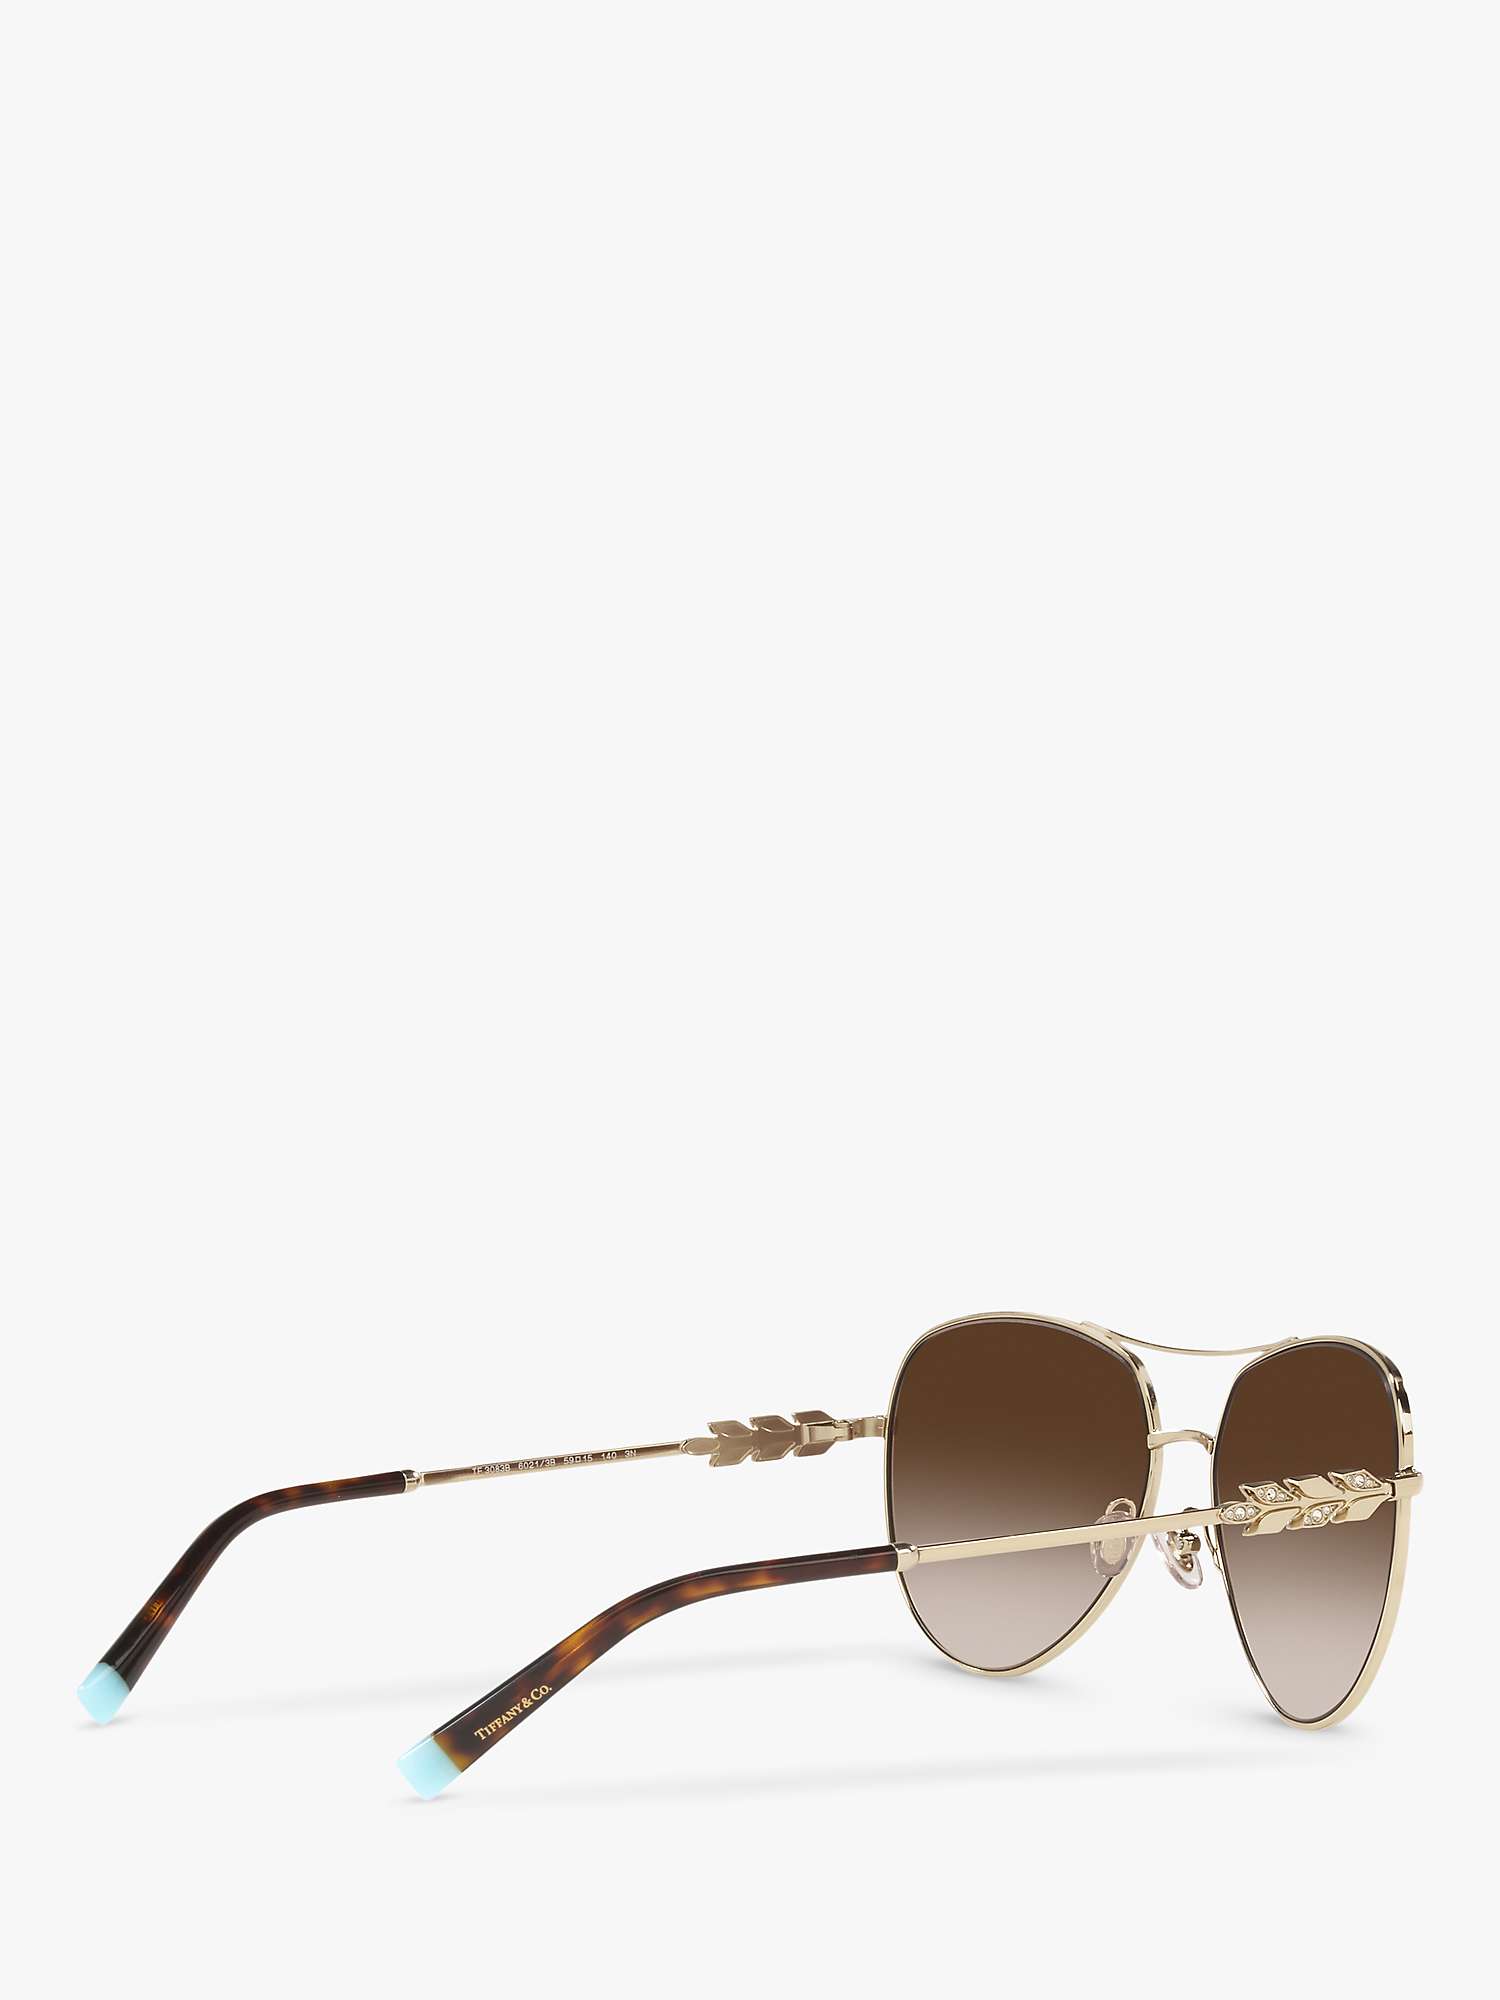 Buy Tiffany & Co TF3083B Women's Pilot Sunglasses, Pale Gold/Brown Gradient Online at johnlewis.com